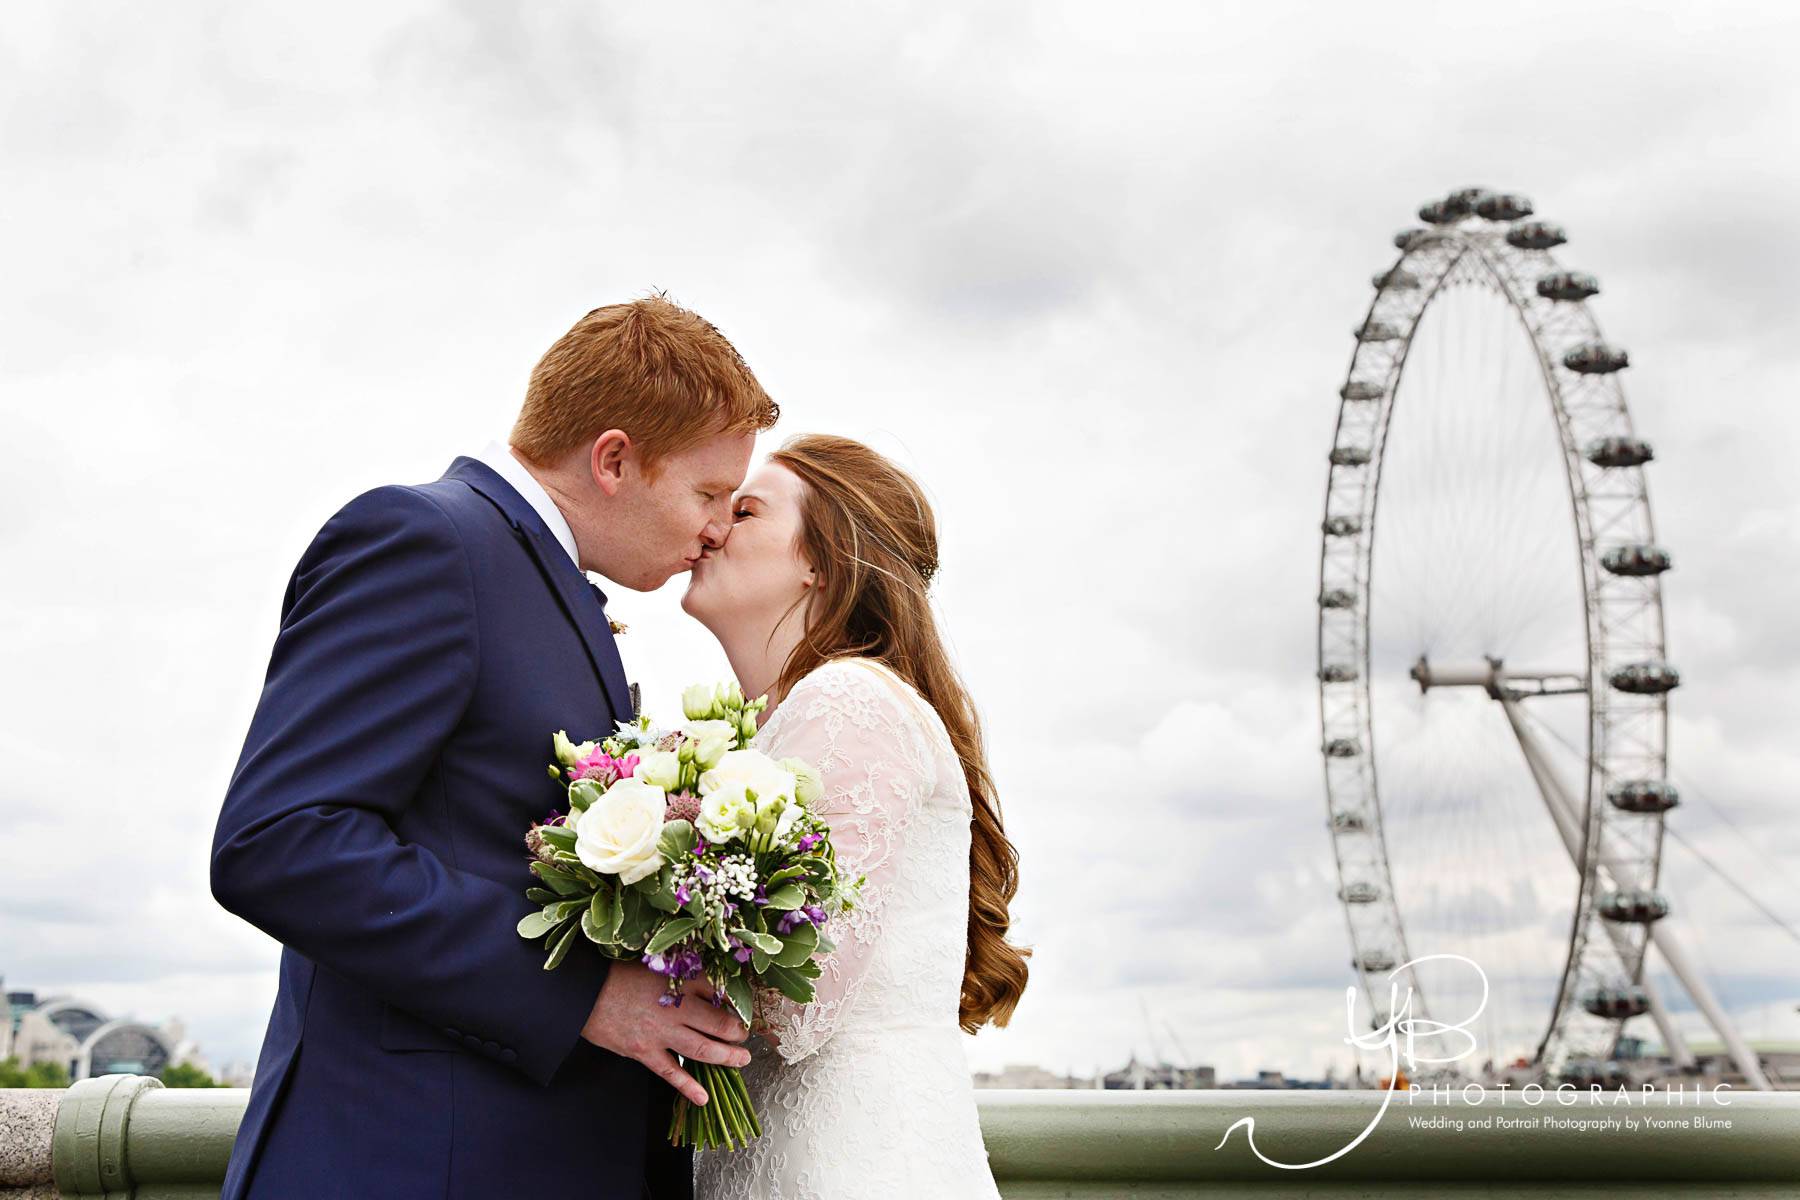 London Landmarks wedding portraits featuring The London Eye